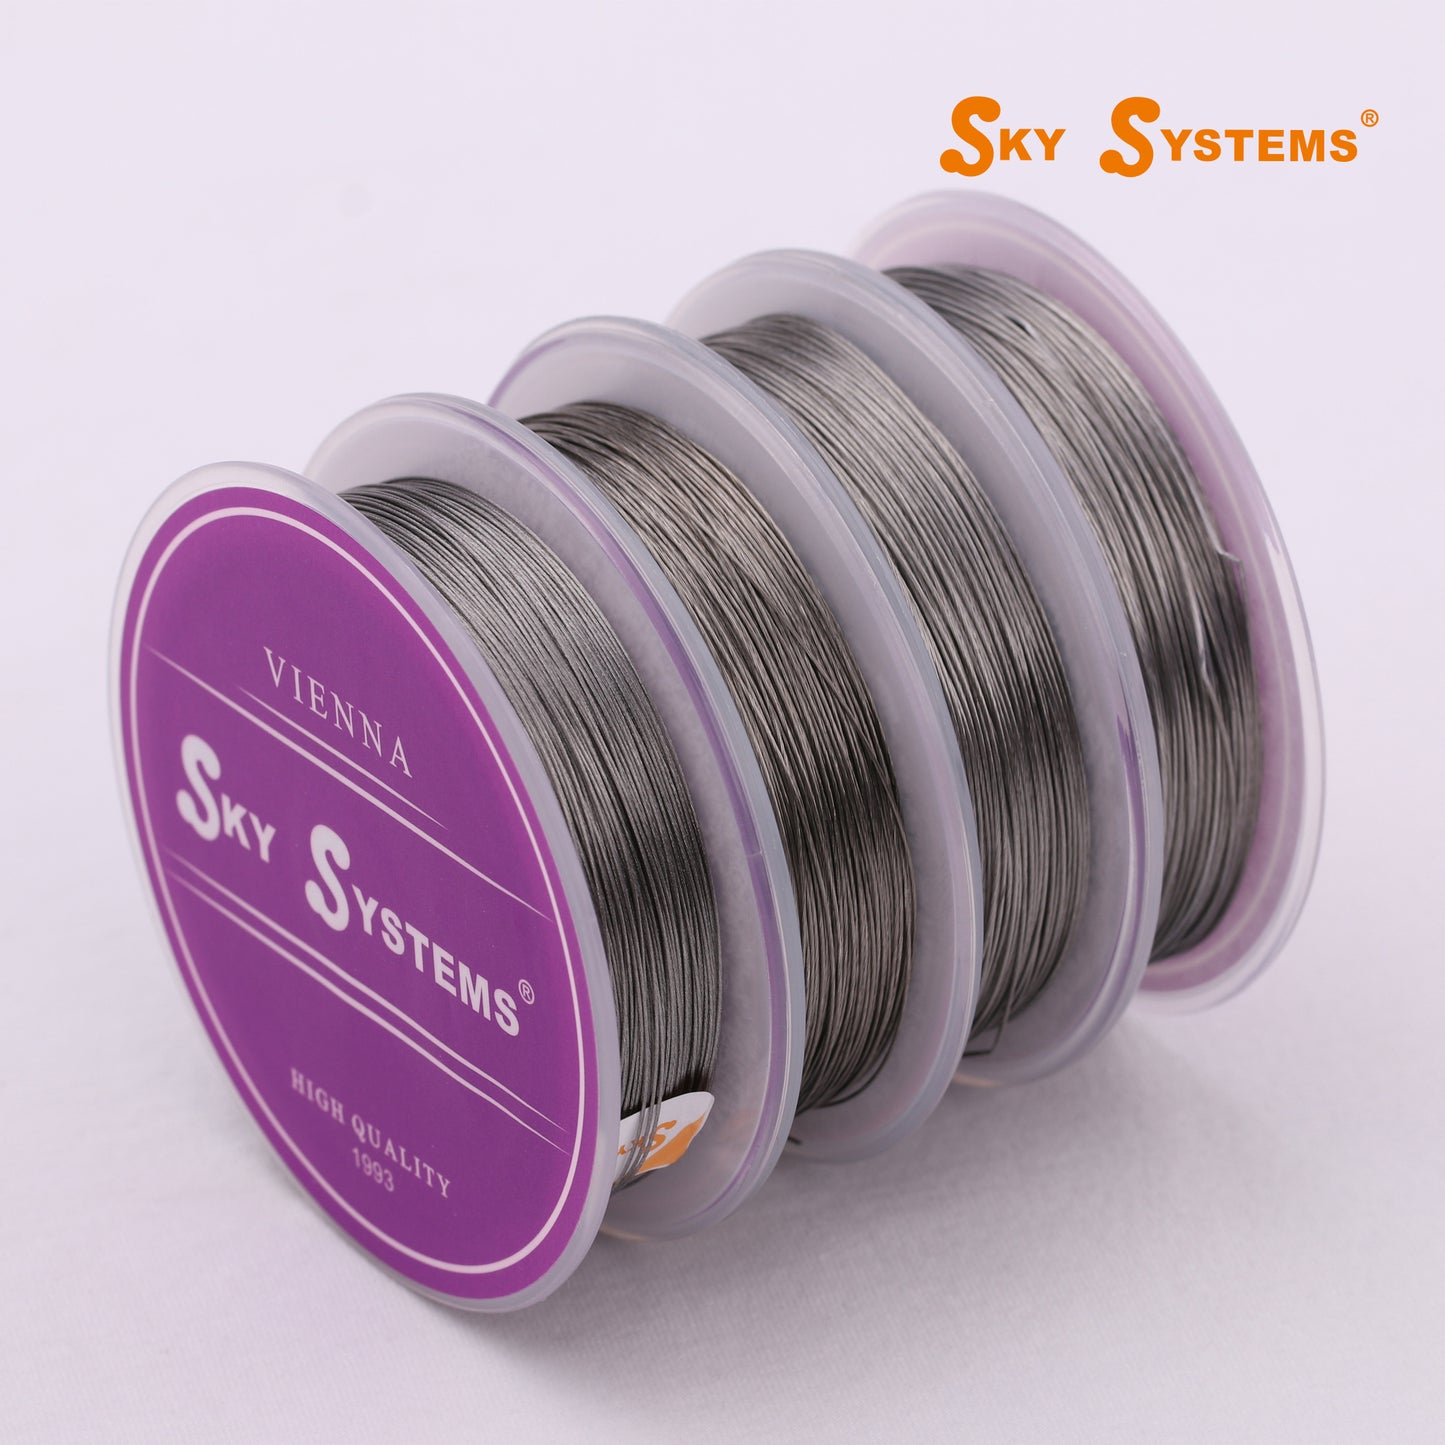 Steel Cord - Nylon coated